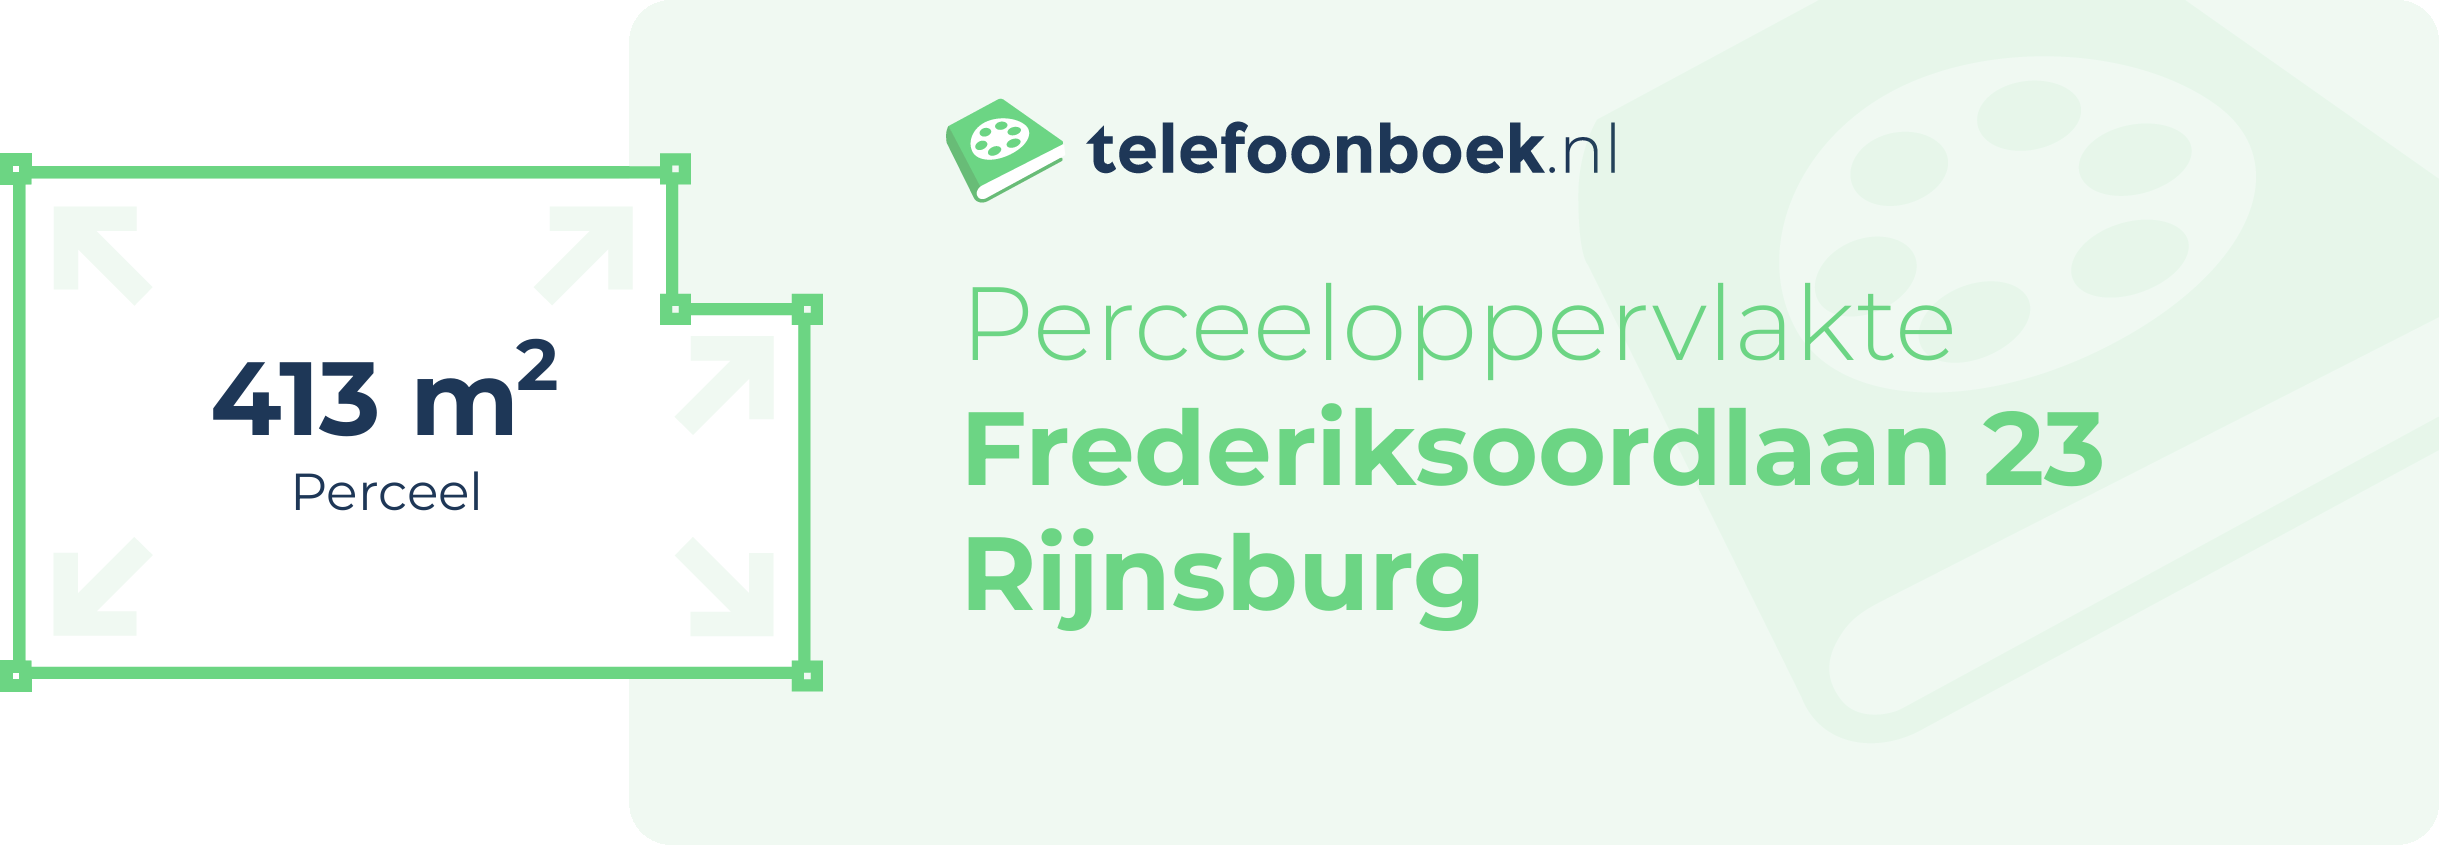 Perceeloppervlakte Frederiksoordlaan 23 Rijnsburg